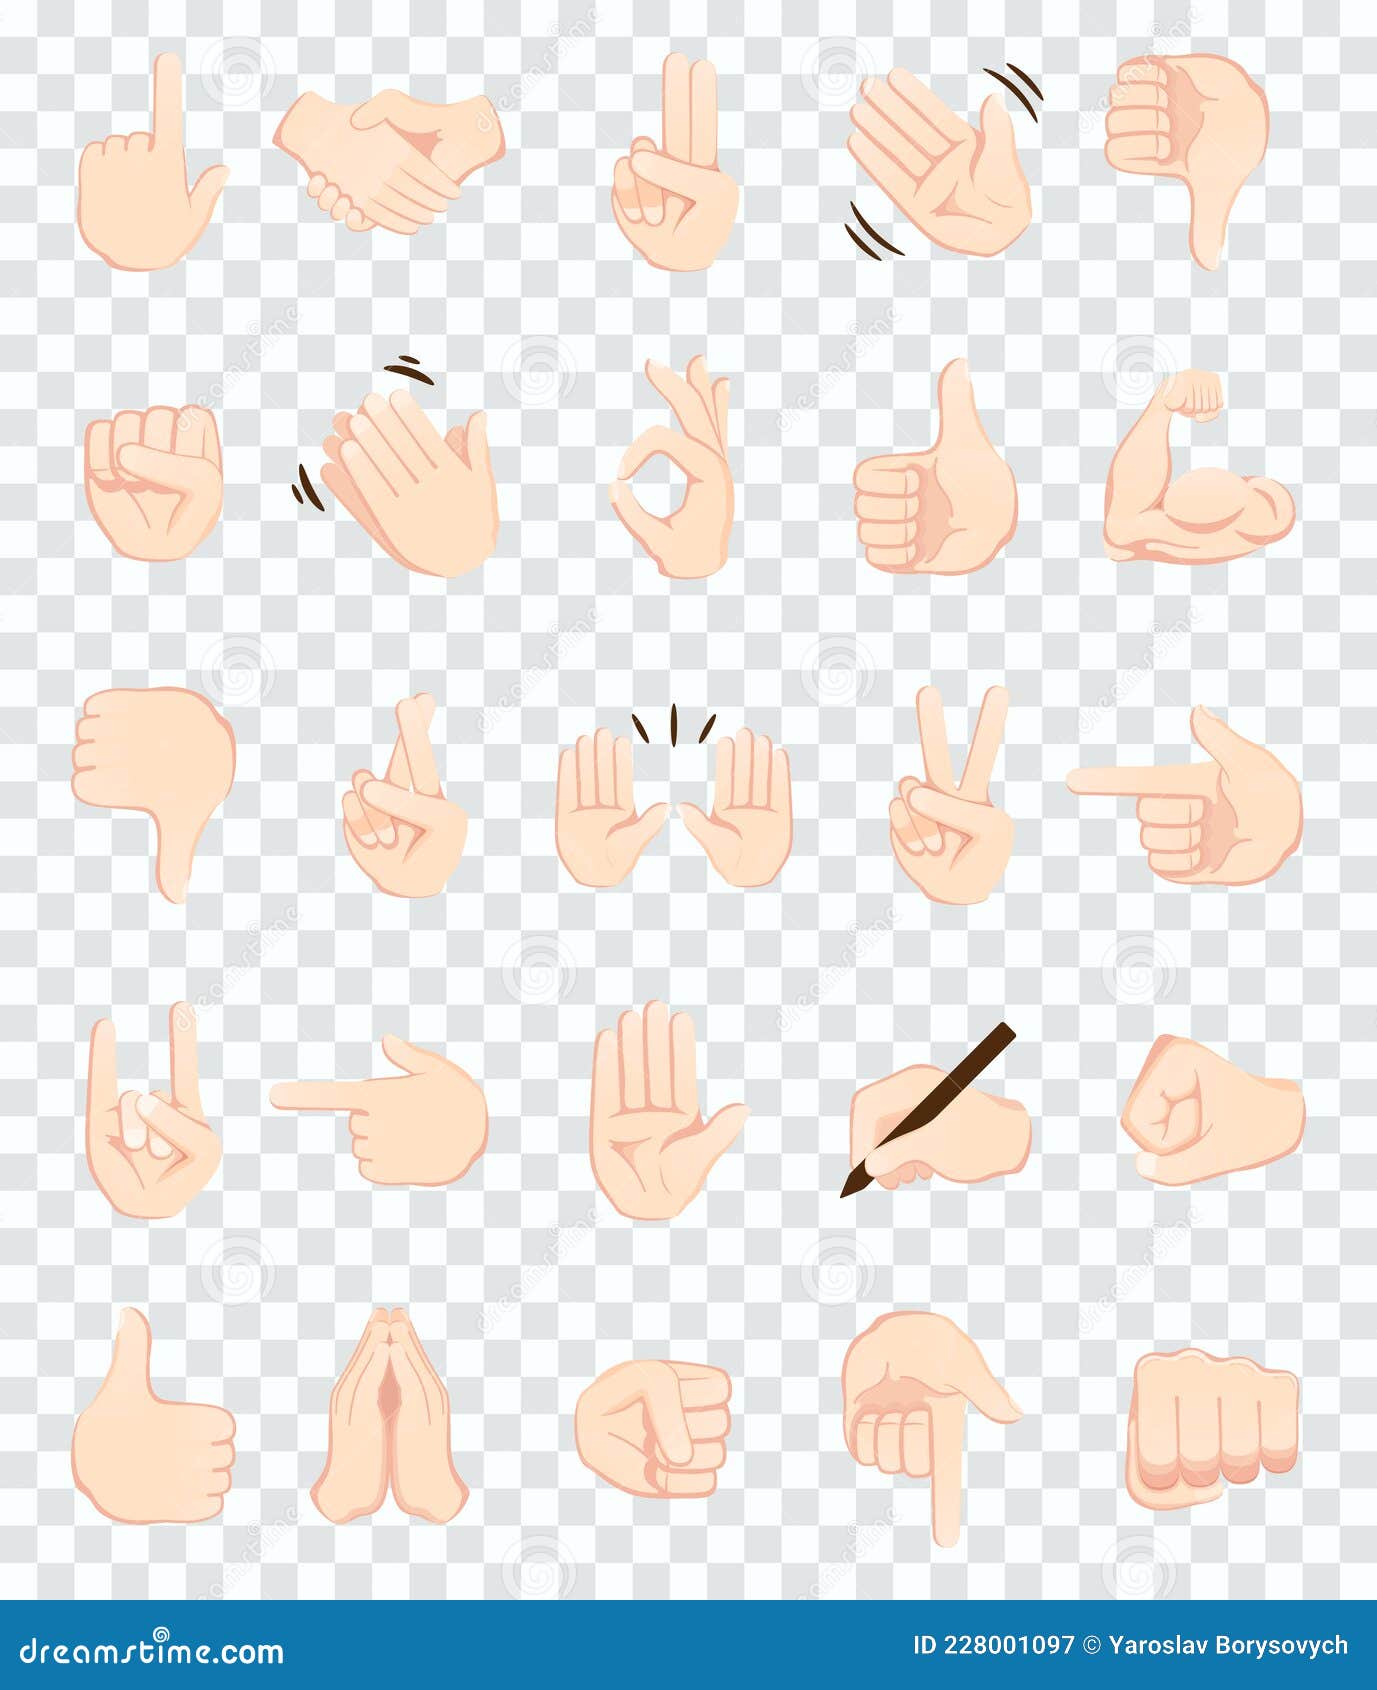 Handshake emoji gesture vector isolated icon illustration. Handshake  gesture icon Stock Vector